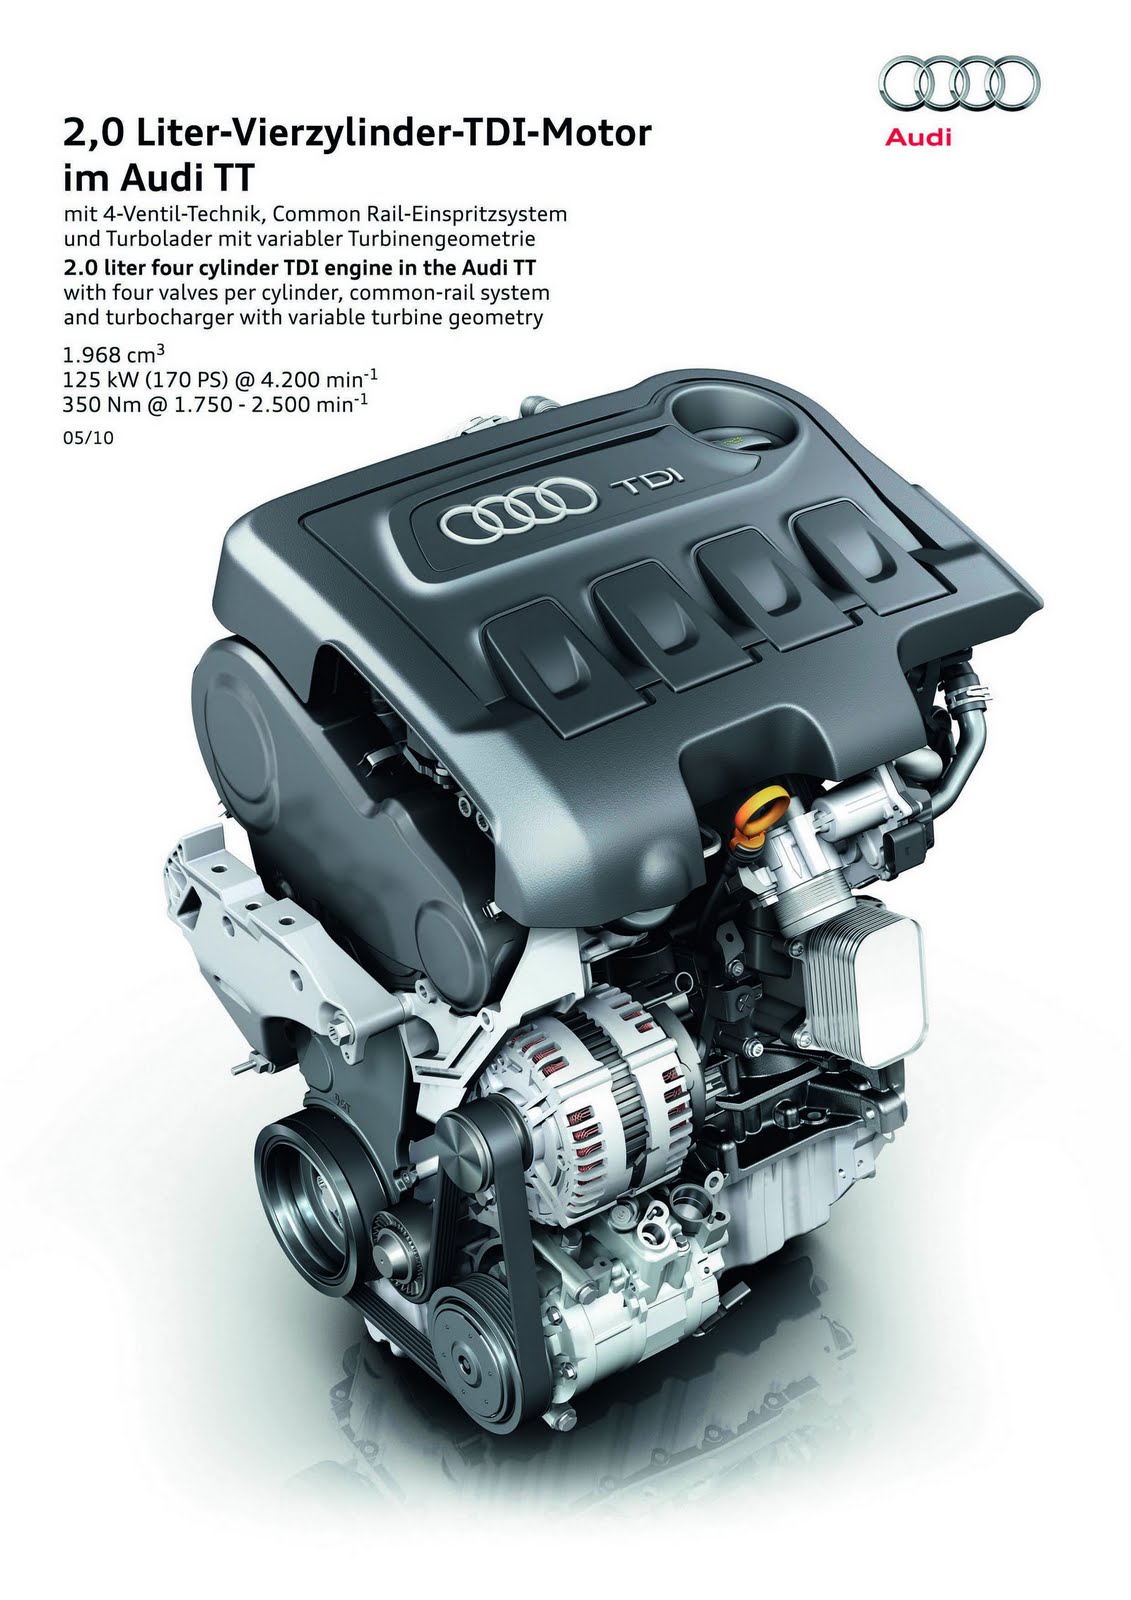 TDI engine of the Audi TT